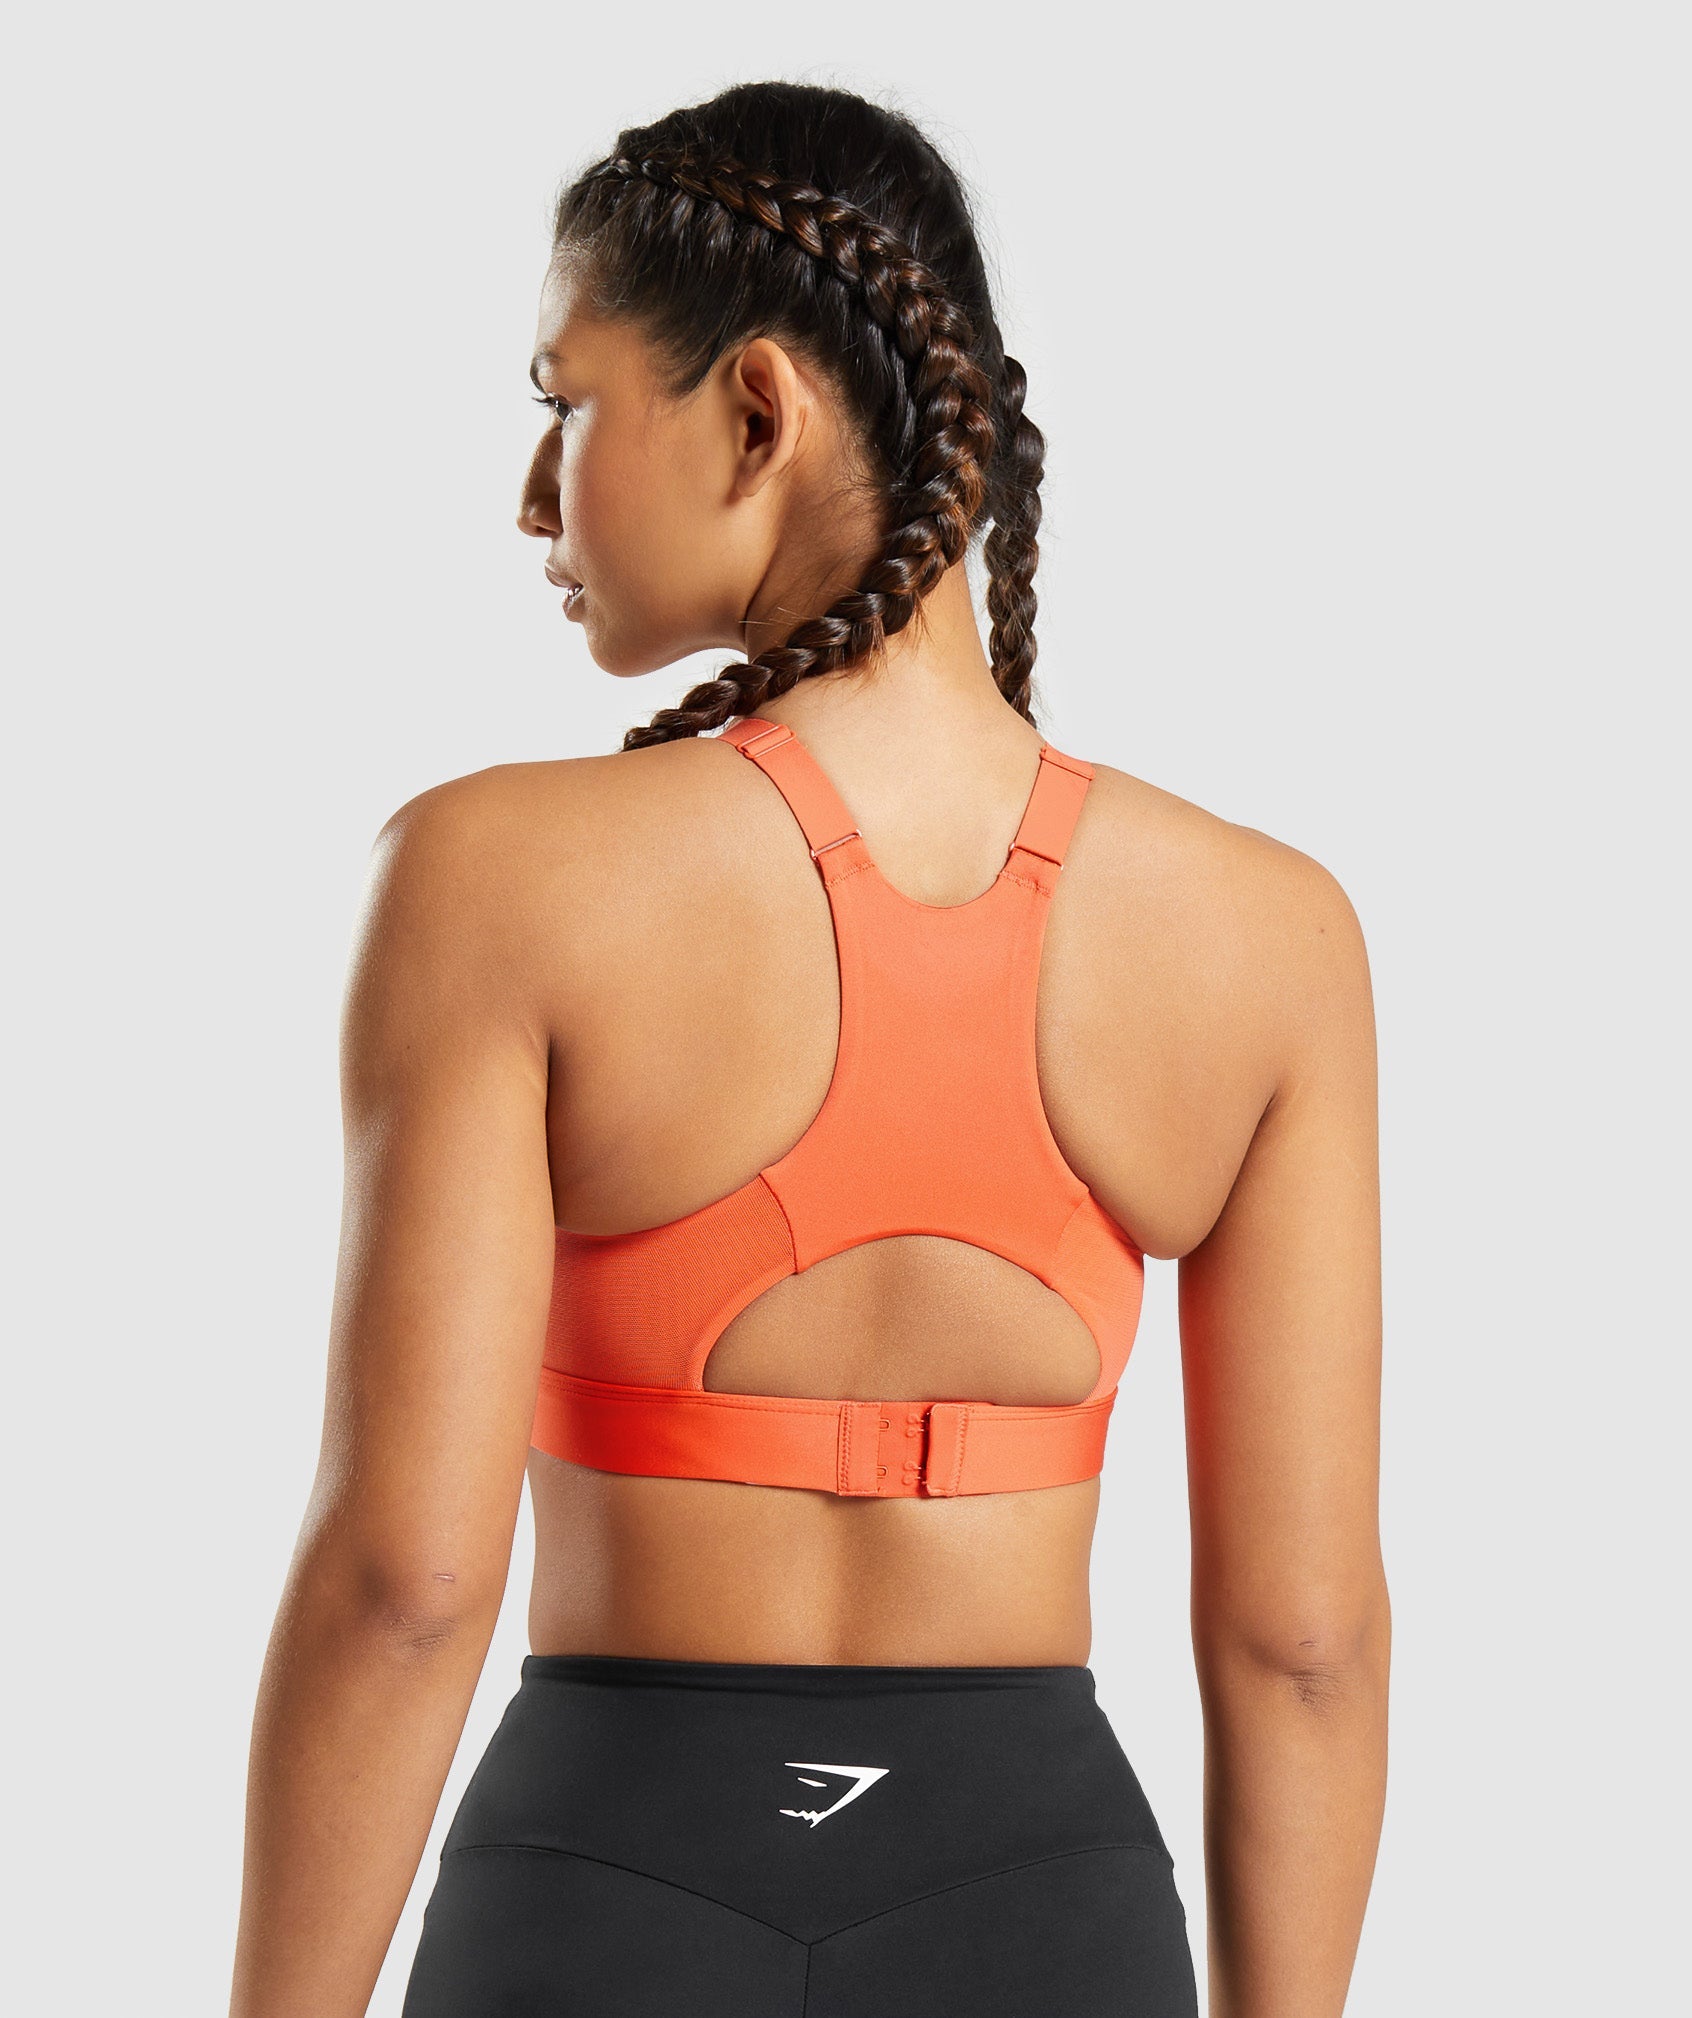 Gymshark Color Block Orange Sports Bra Size XS (Estimated) - 64% off